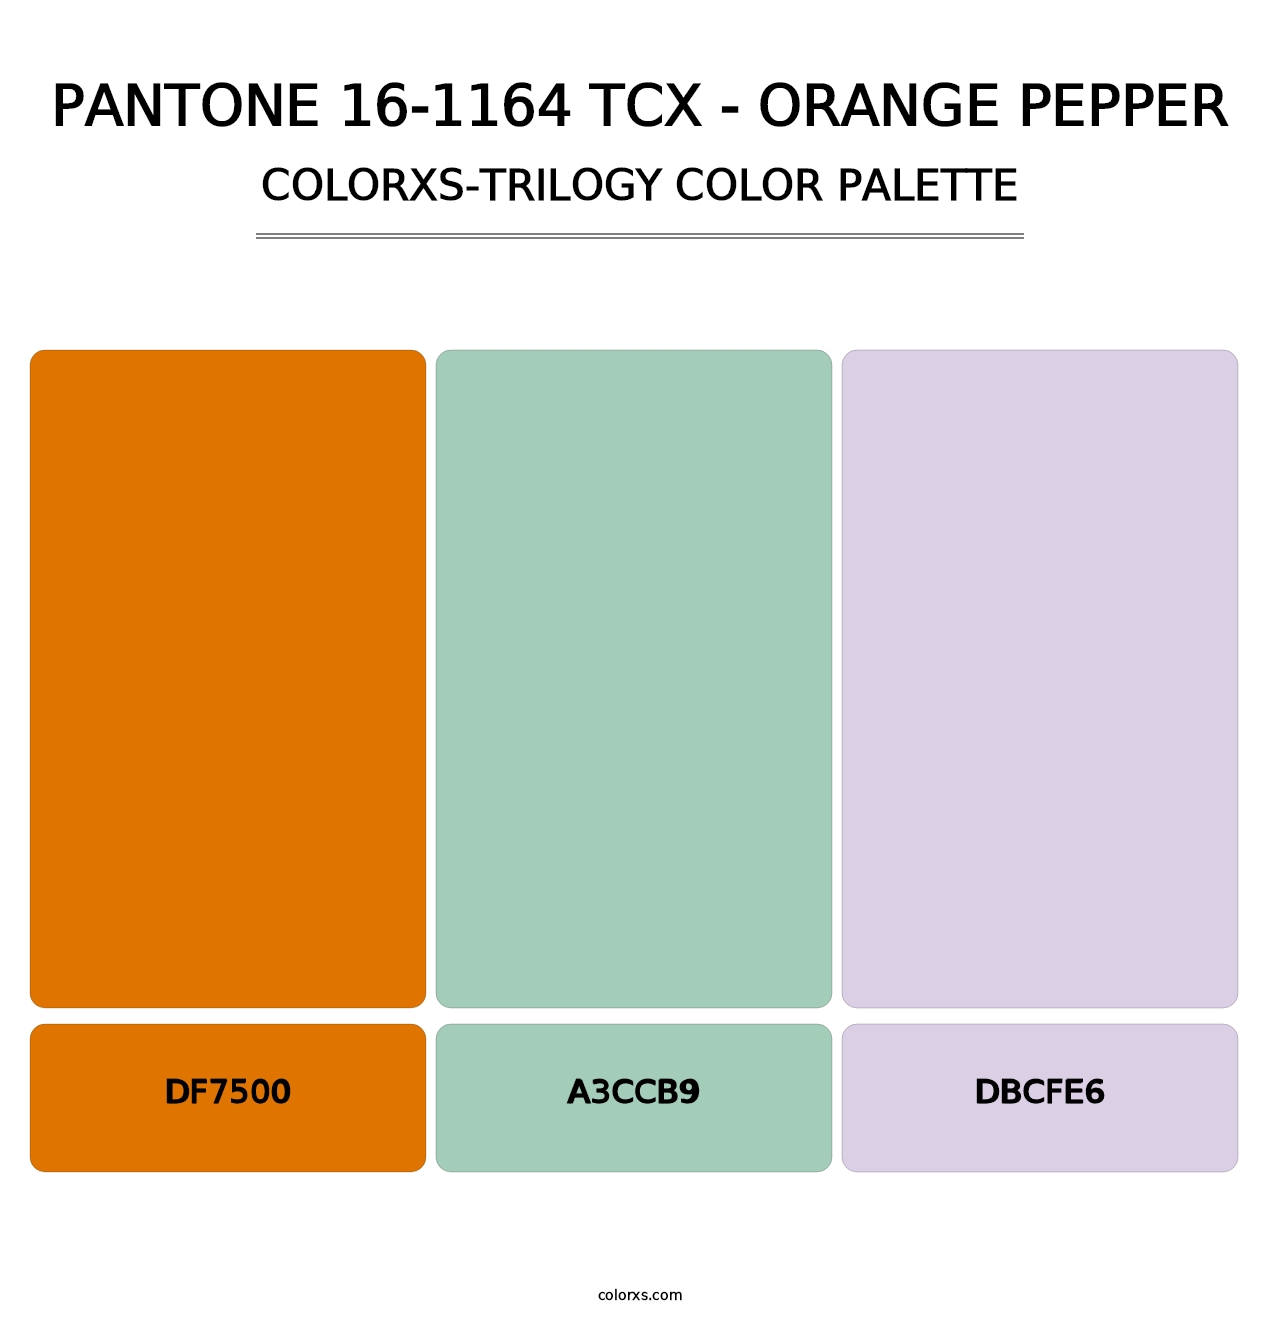 PANTONE 16-1164 TCX - Orange Pepper - Colorxs Trilogy Palette